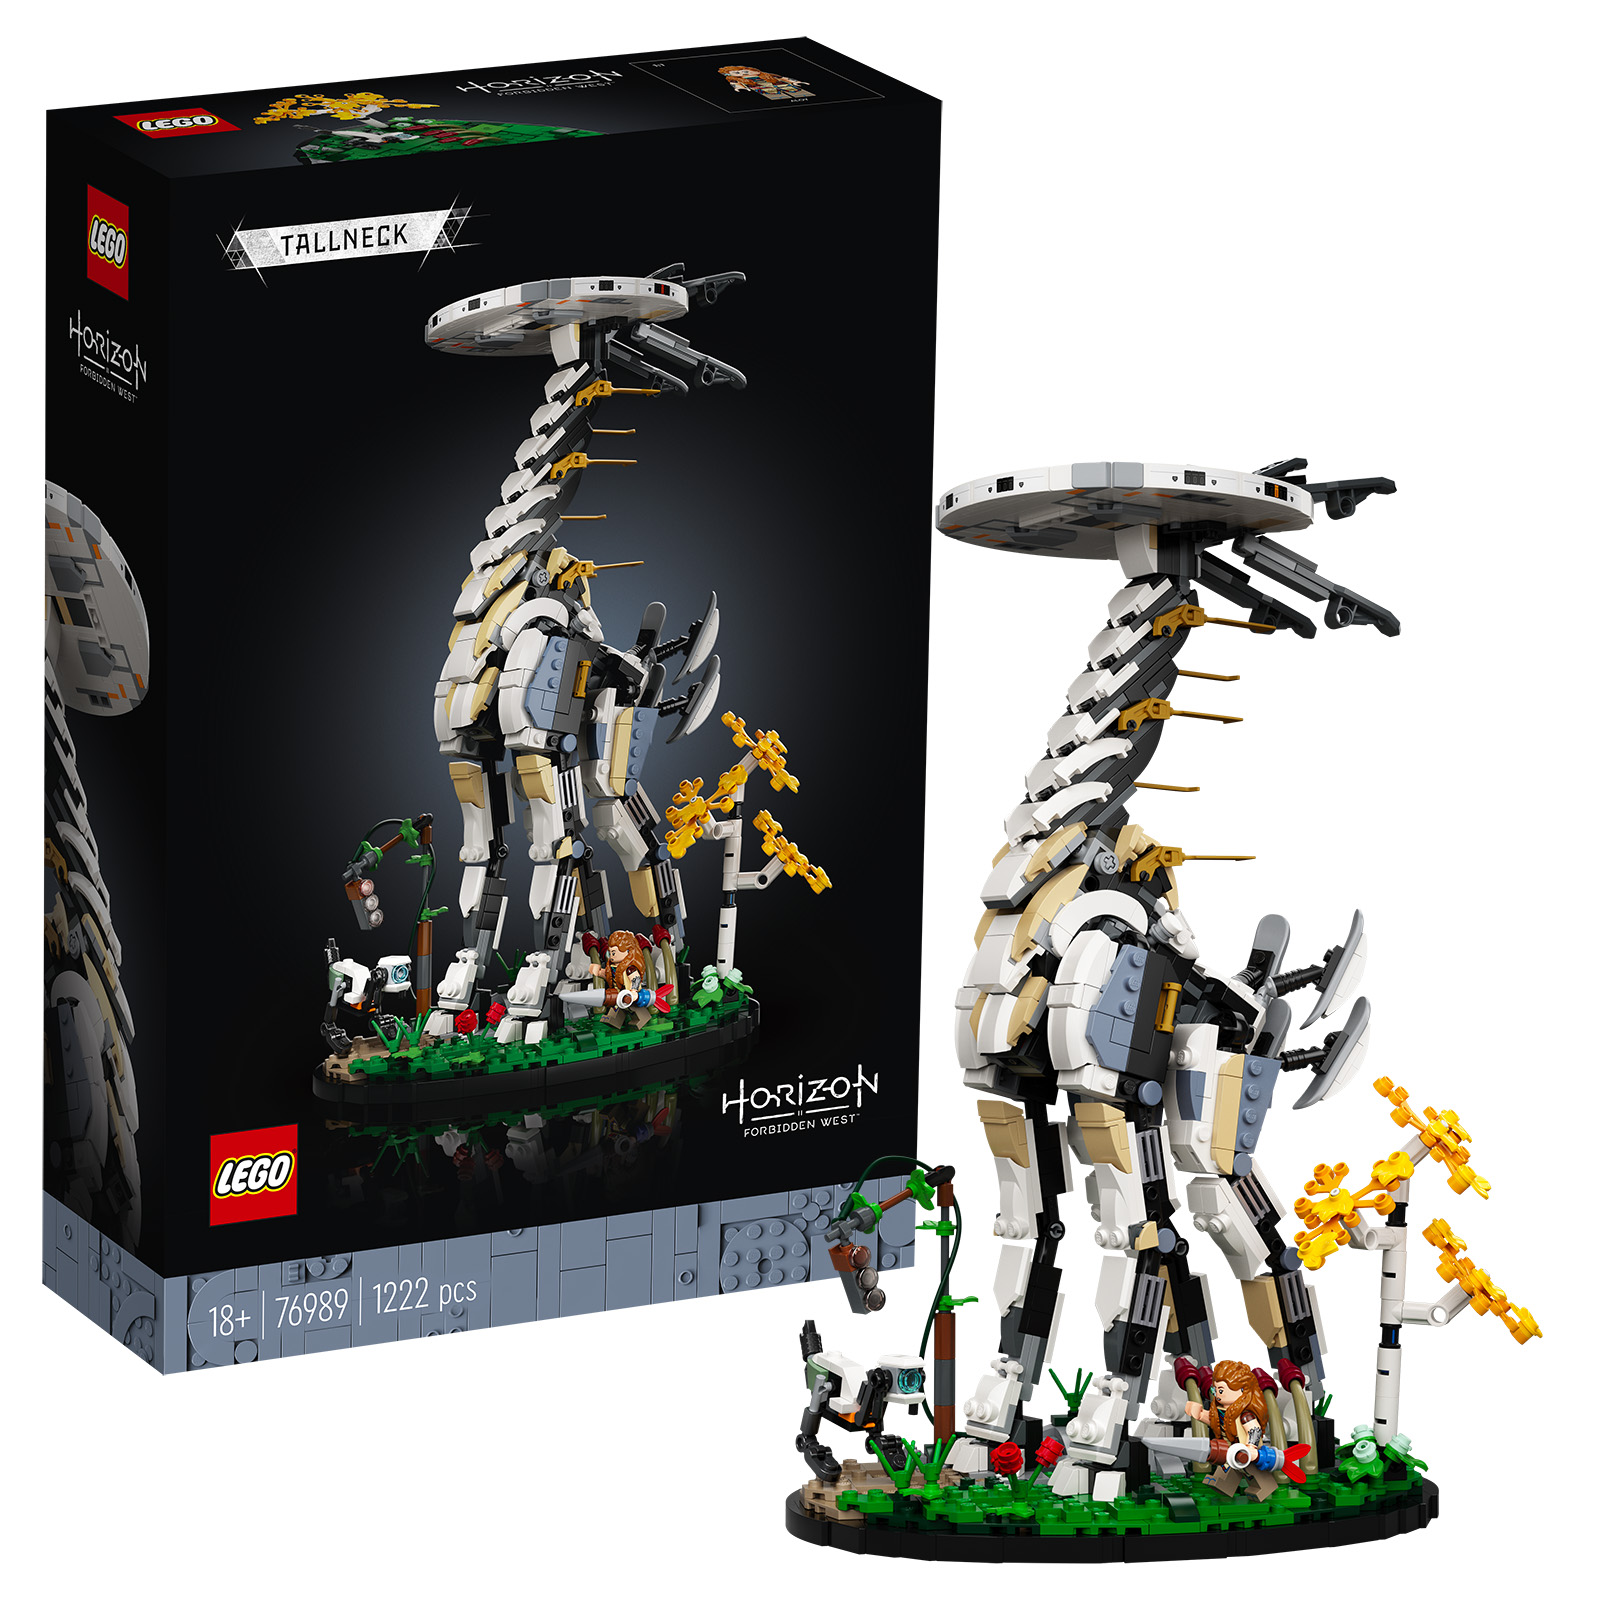 Horizon Forbidden West' has its own Lego set